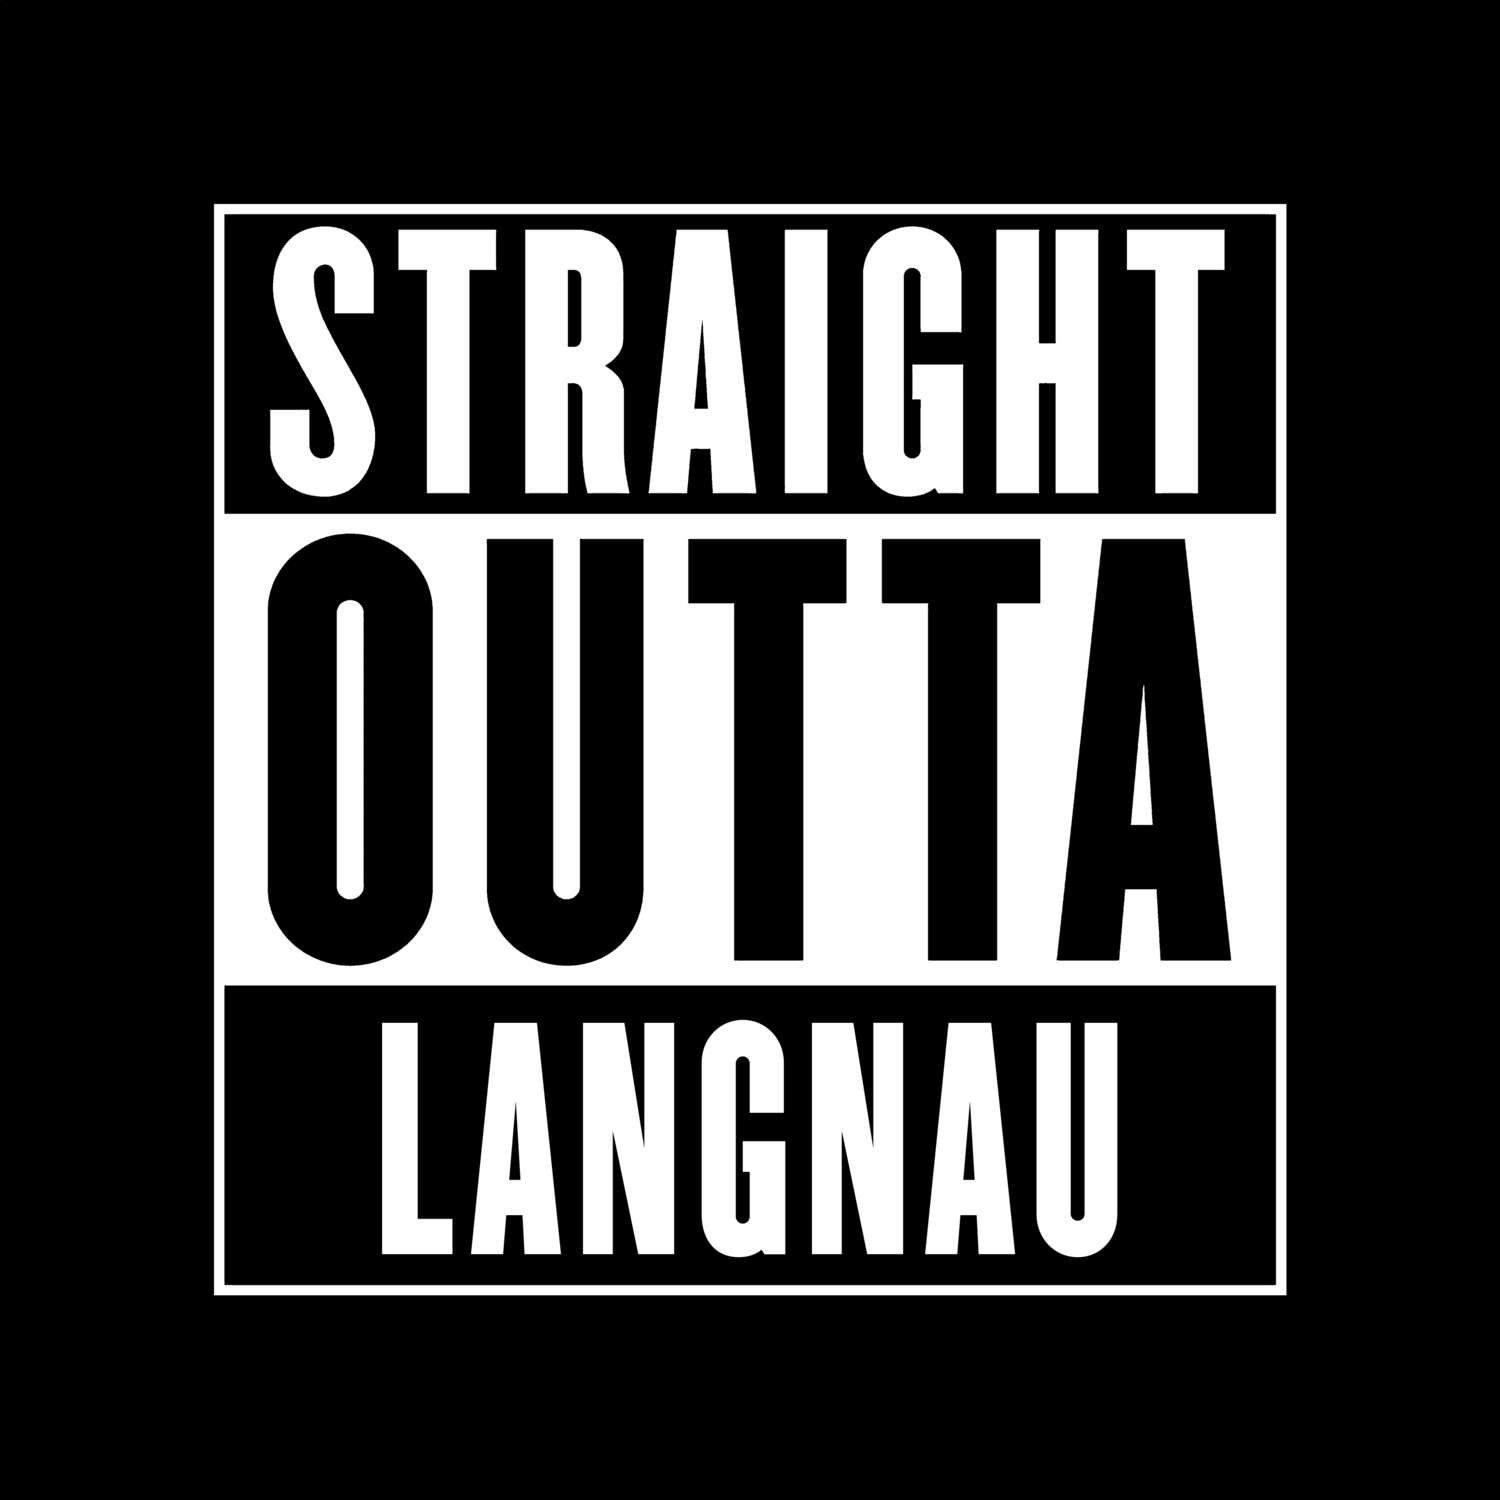 Langnau T-Shirt »Straight Outta«